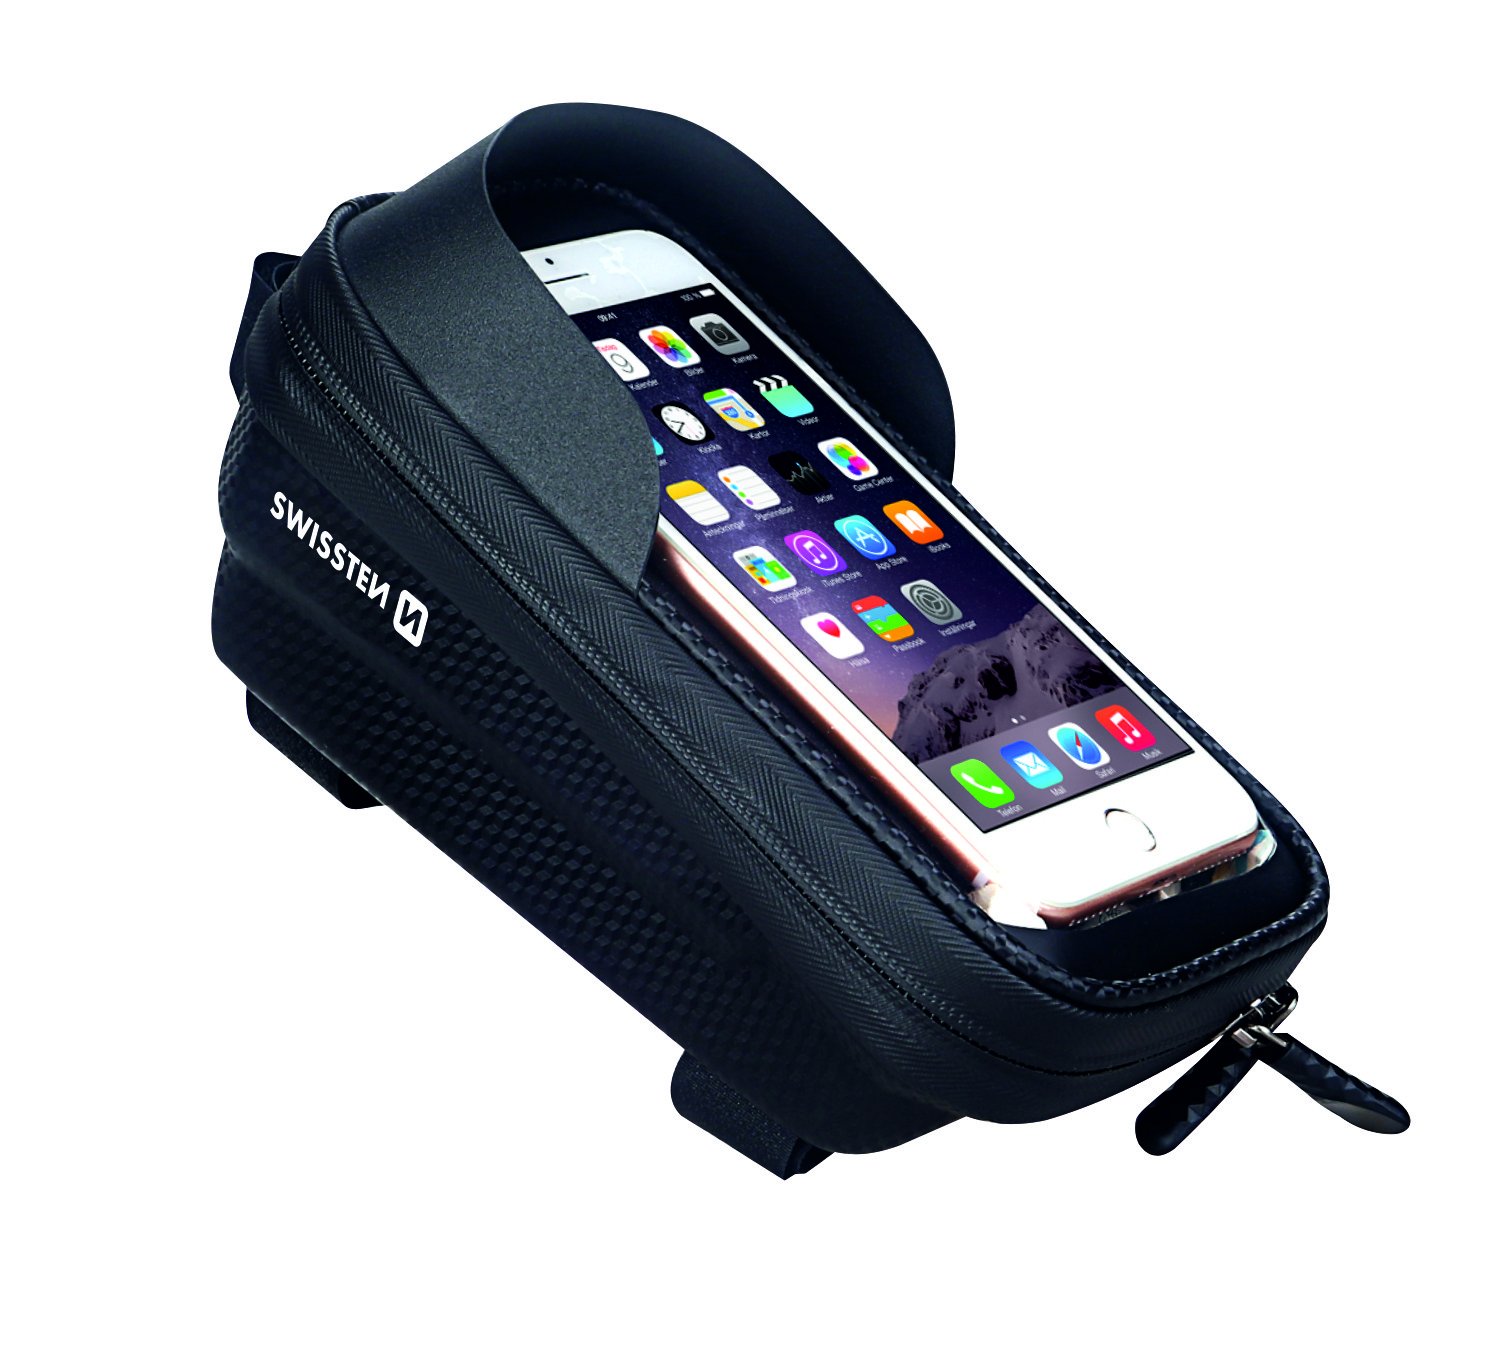 Swissten Waterproof Bike holder / bag For 5.4 - 6.7 inches Mobile phones Black